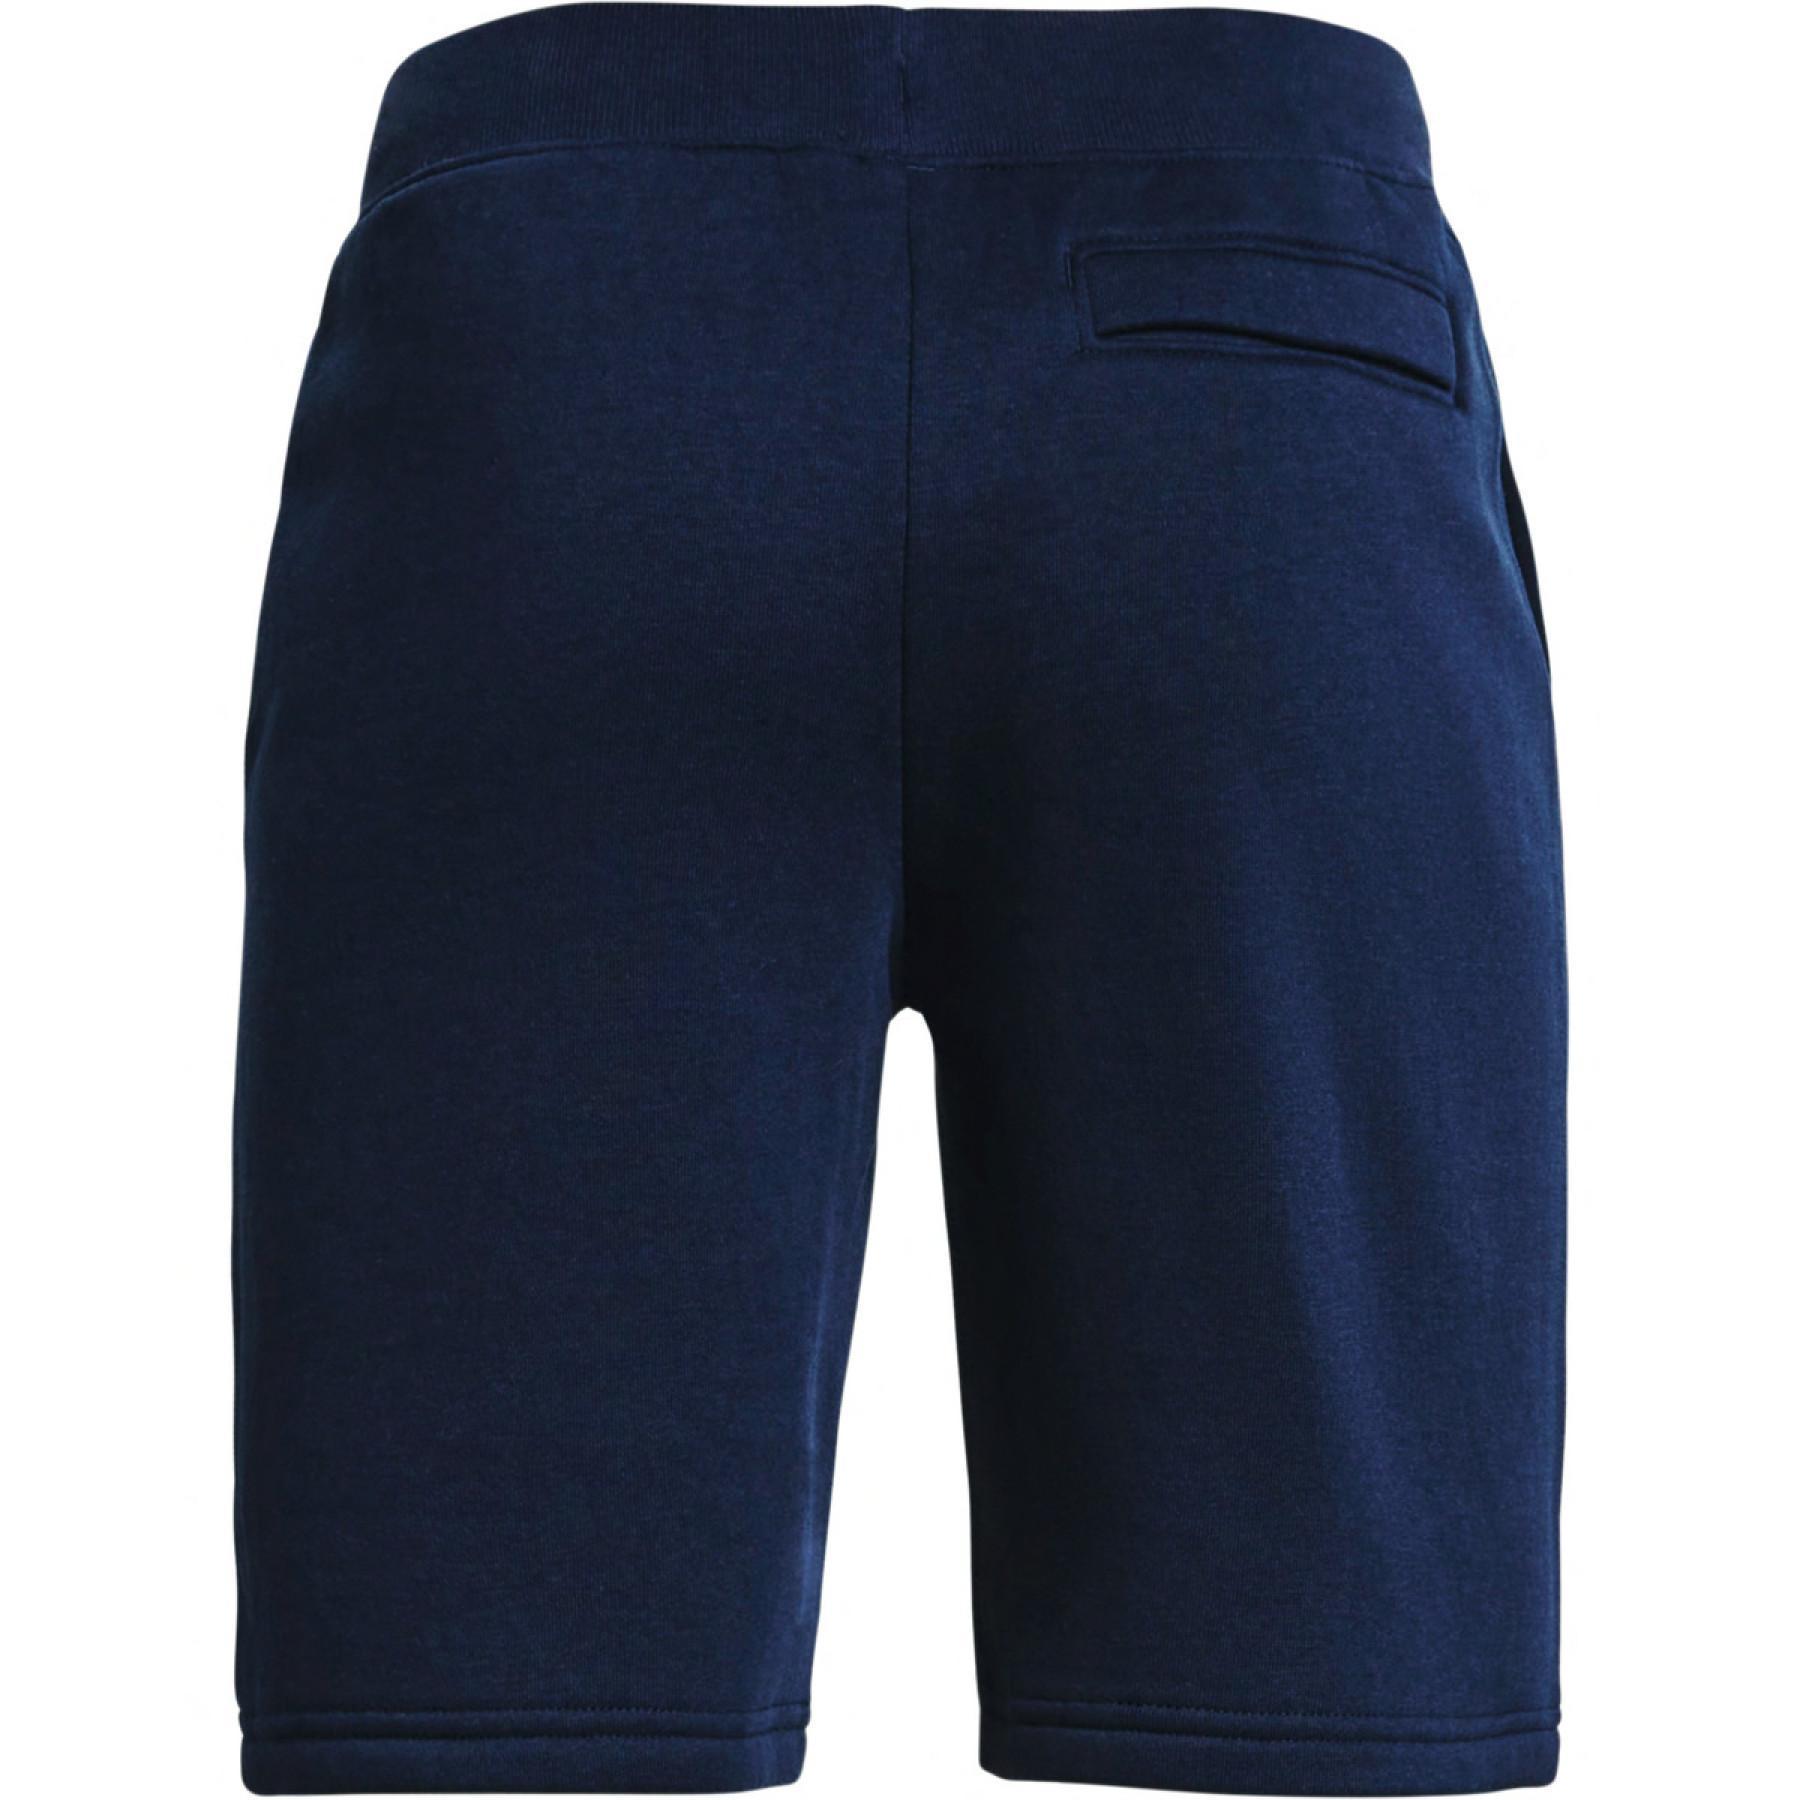 Pantalones cortos de niño Under Armour Rival coton